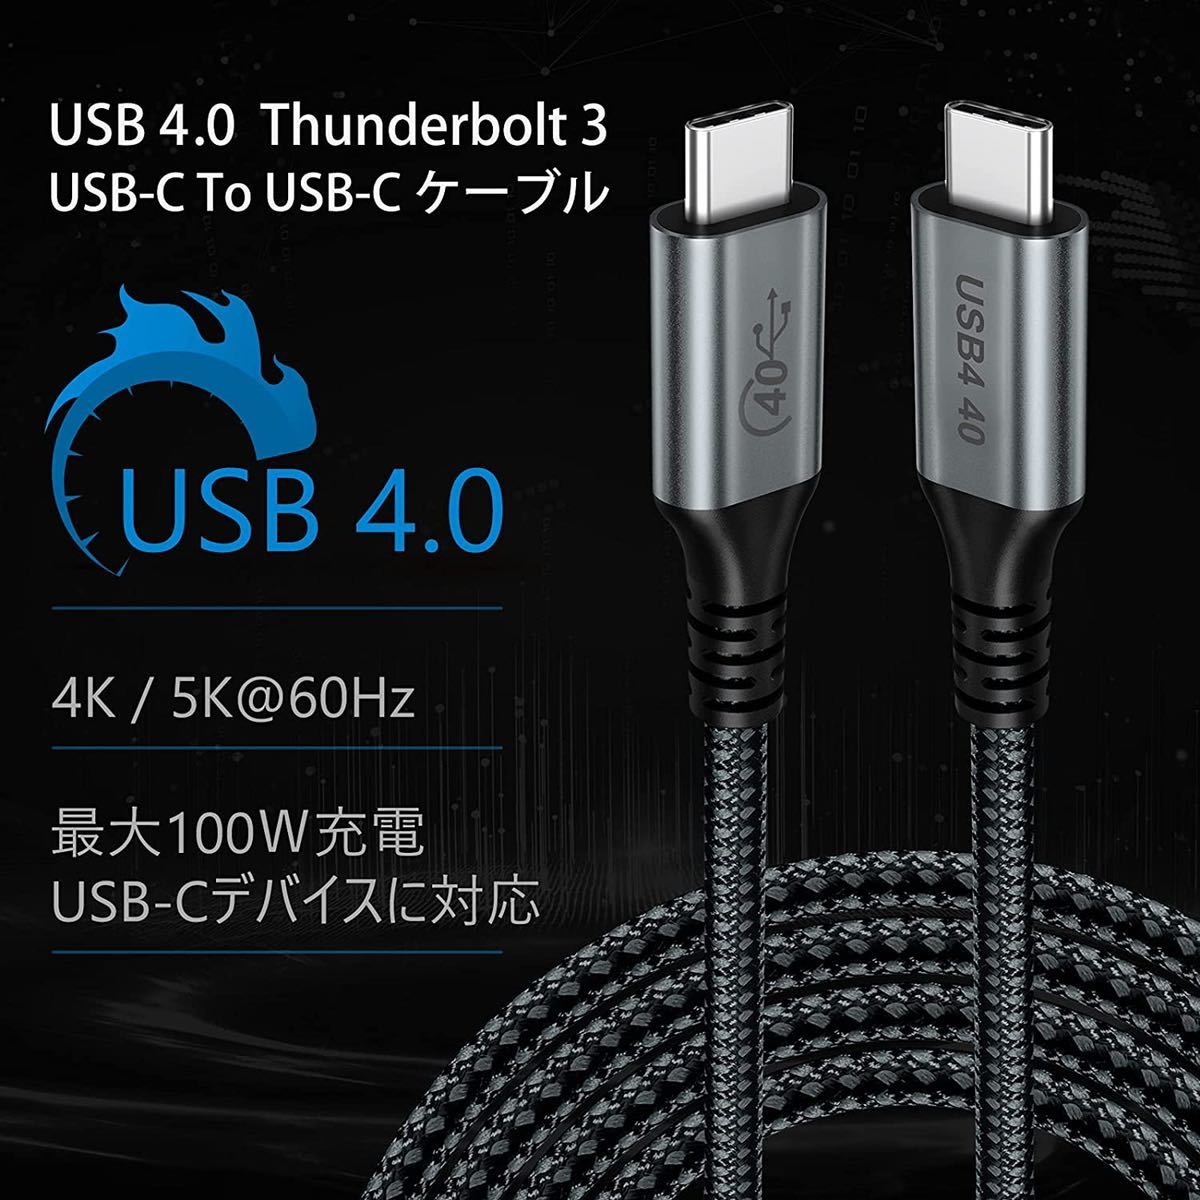 USB-C To USB-C Thunderbolt 3 ケーブル Type C USB4 ケーブル【1M 】40Gbps高速転送